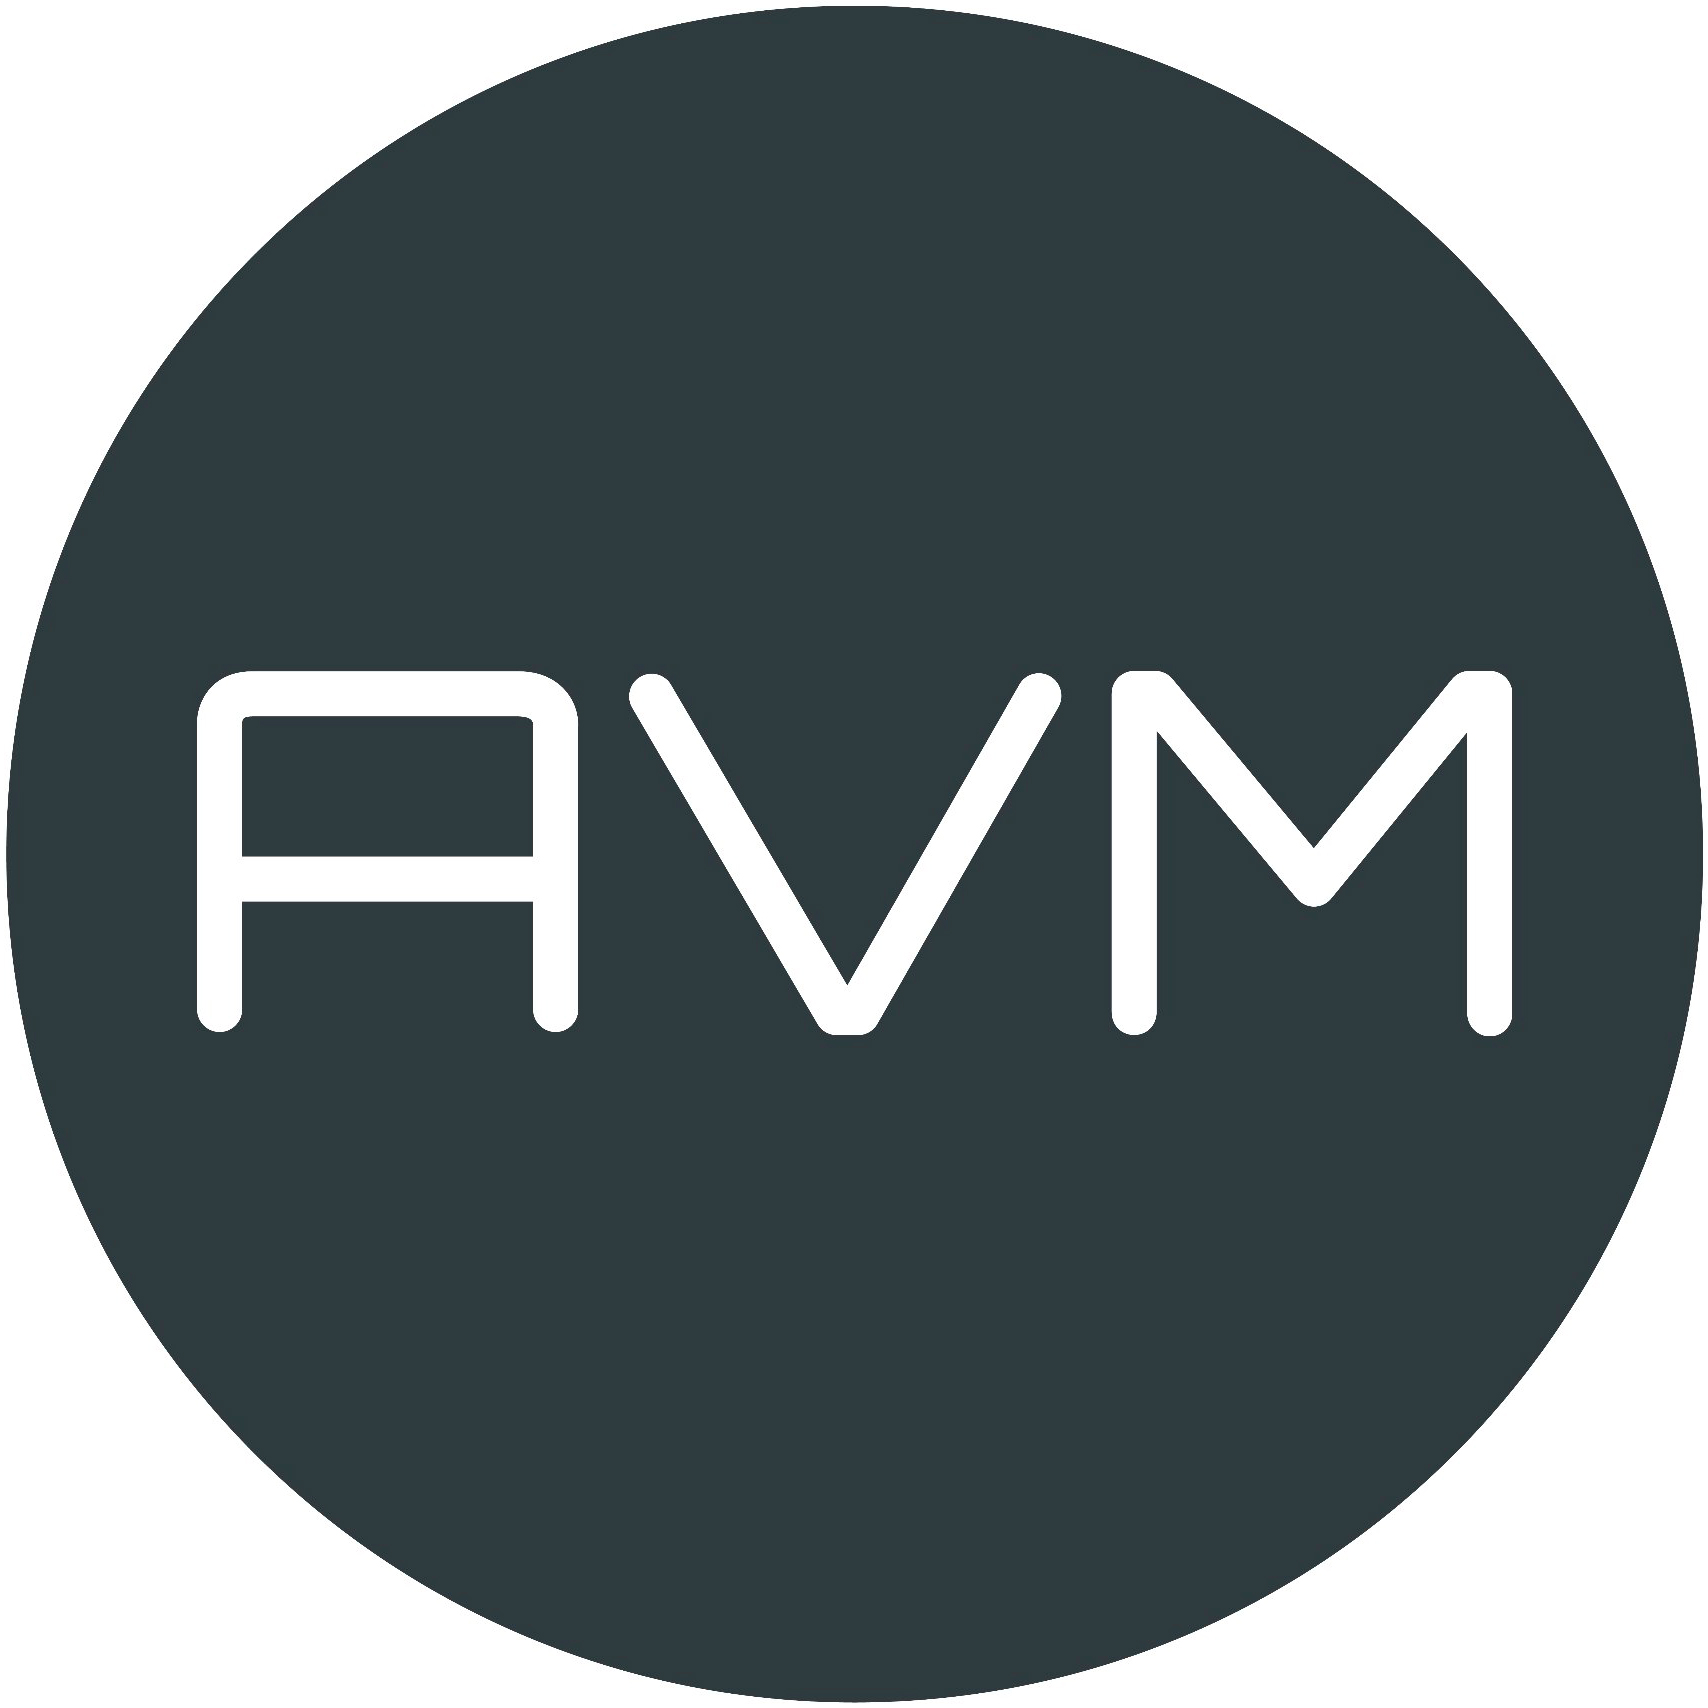 AVM Audio